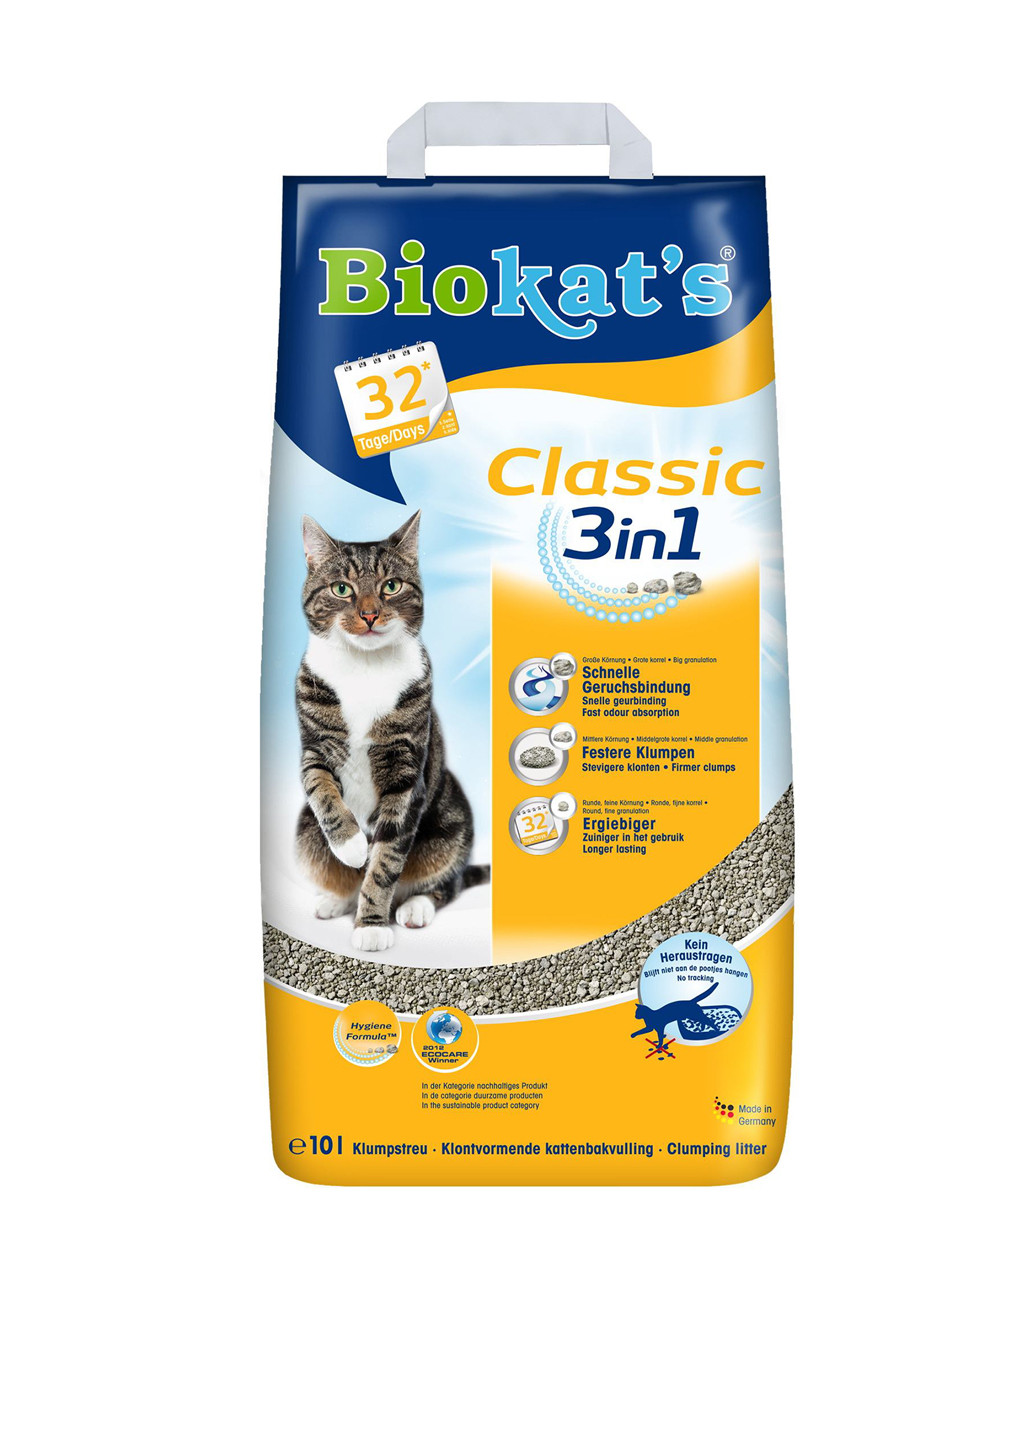 Песок CLASSIC 3in1, 10 л Biokat's (251372282)